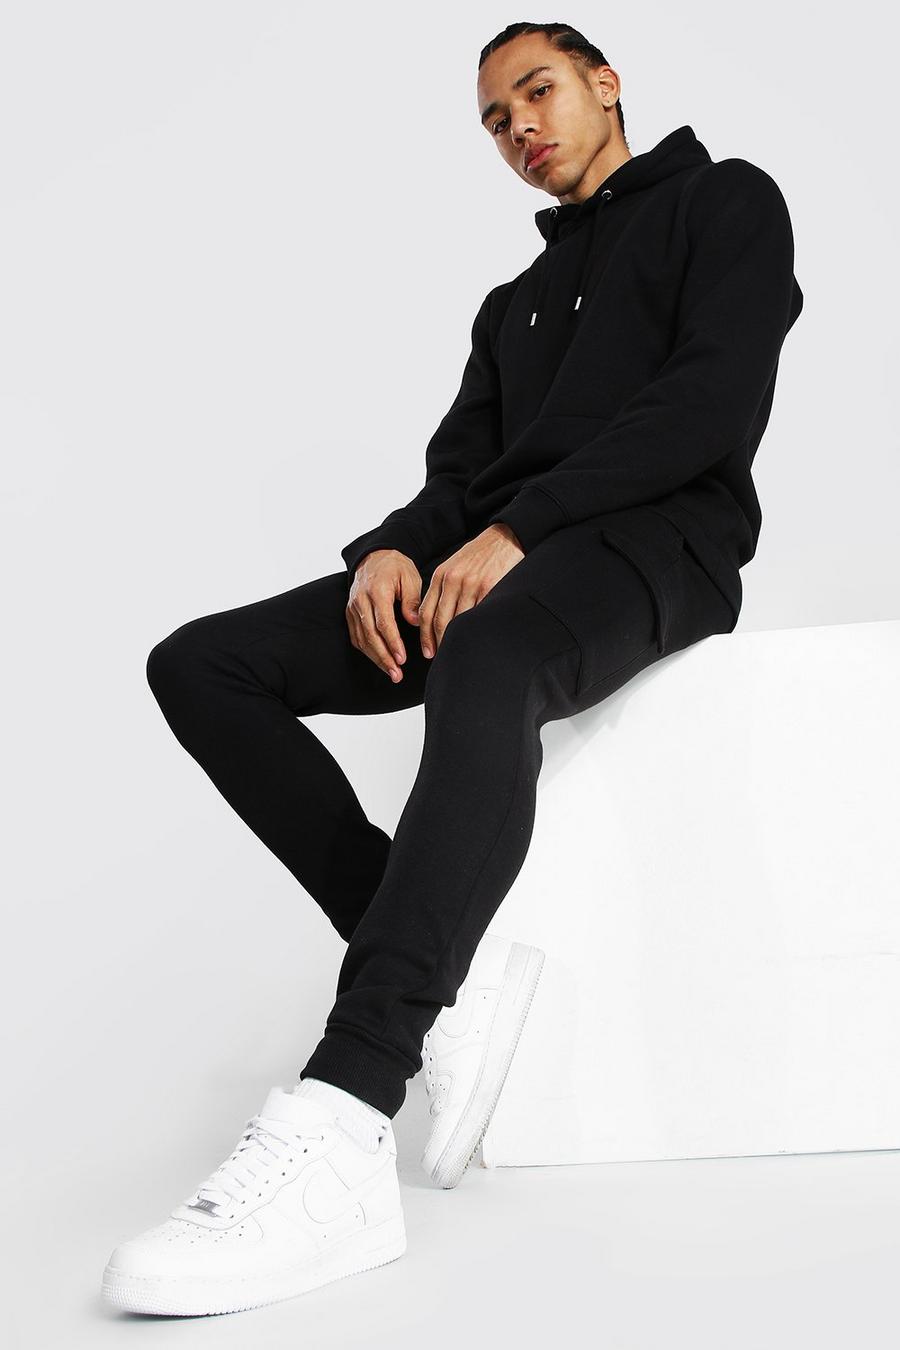 Black Plaid shirt jacket with regular fit